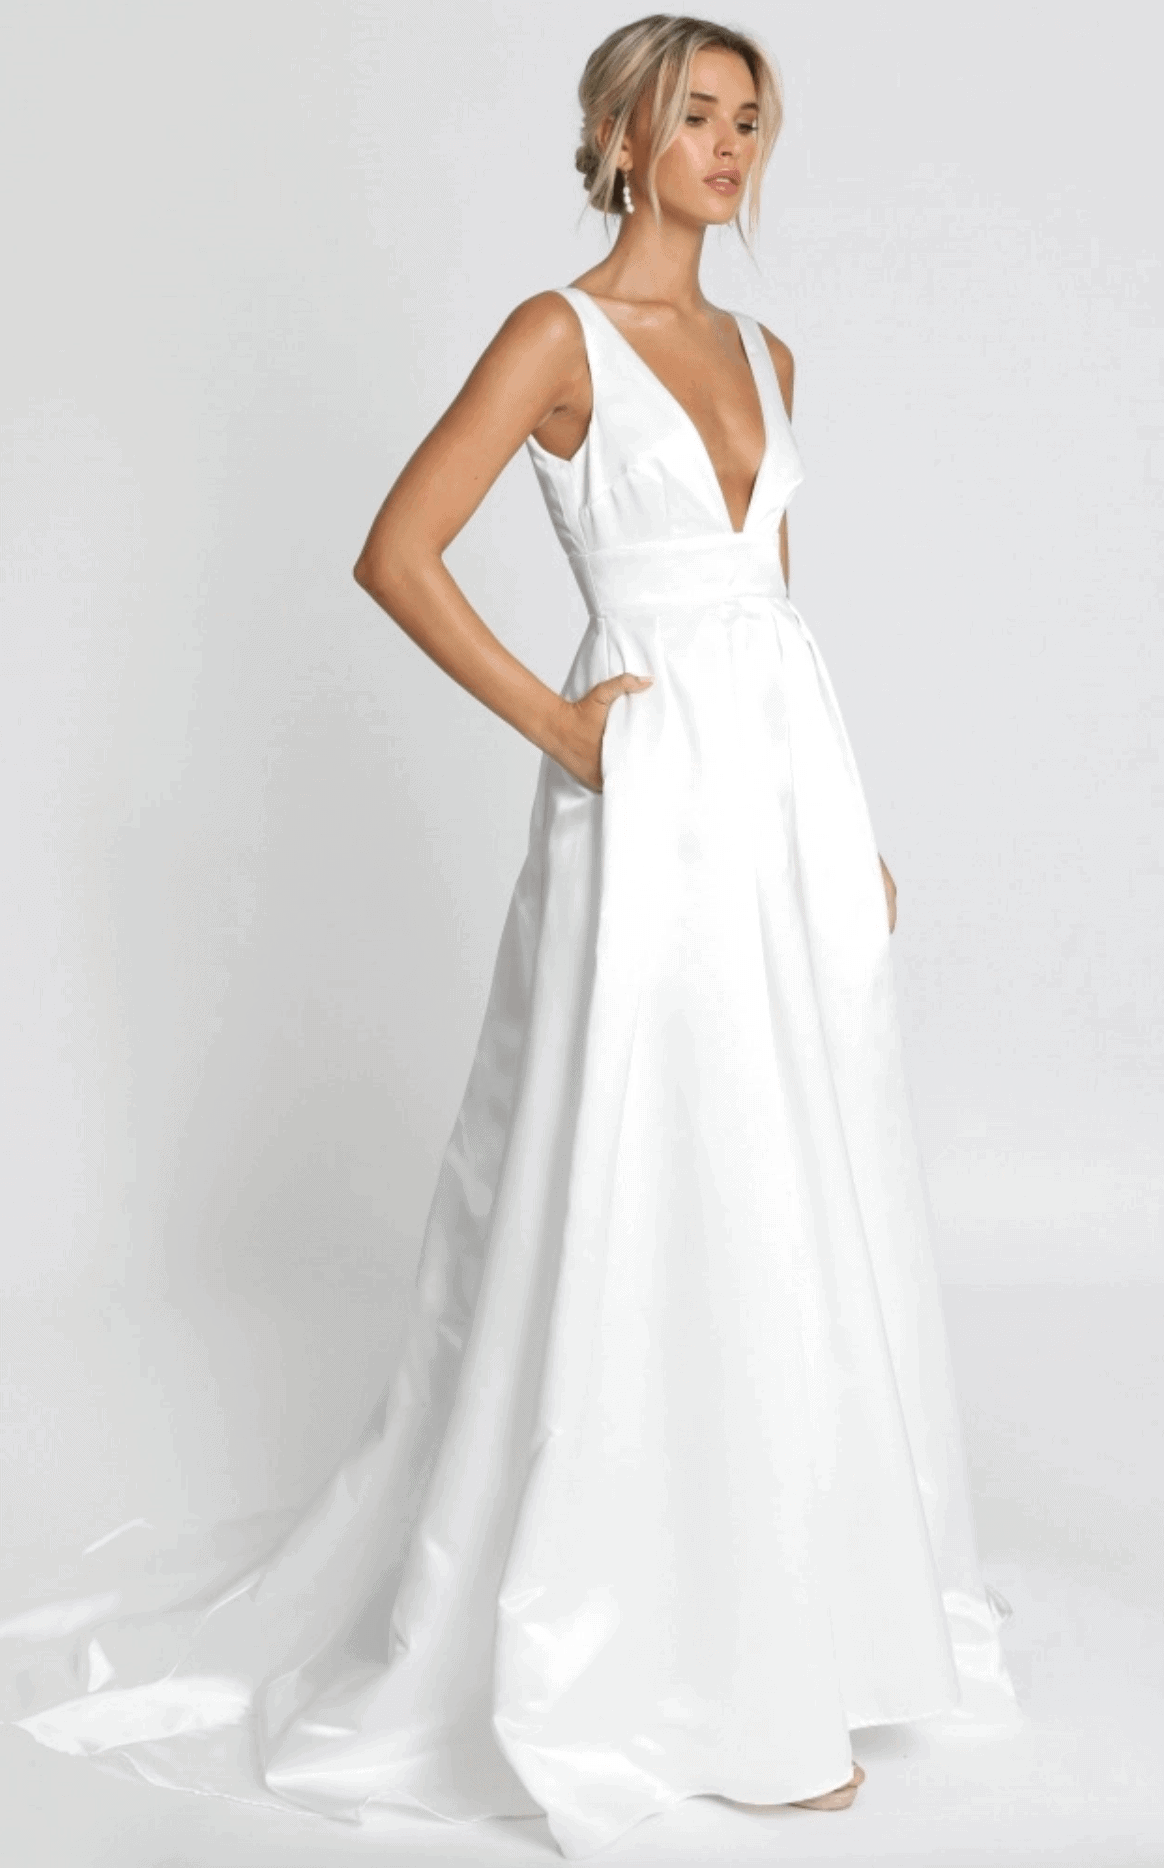 Cheap Affordable Wedding Dresses Deep V Neck Eyes of the Beholder Gown in White Showpo Bridal